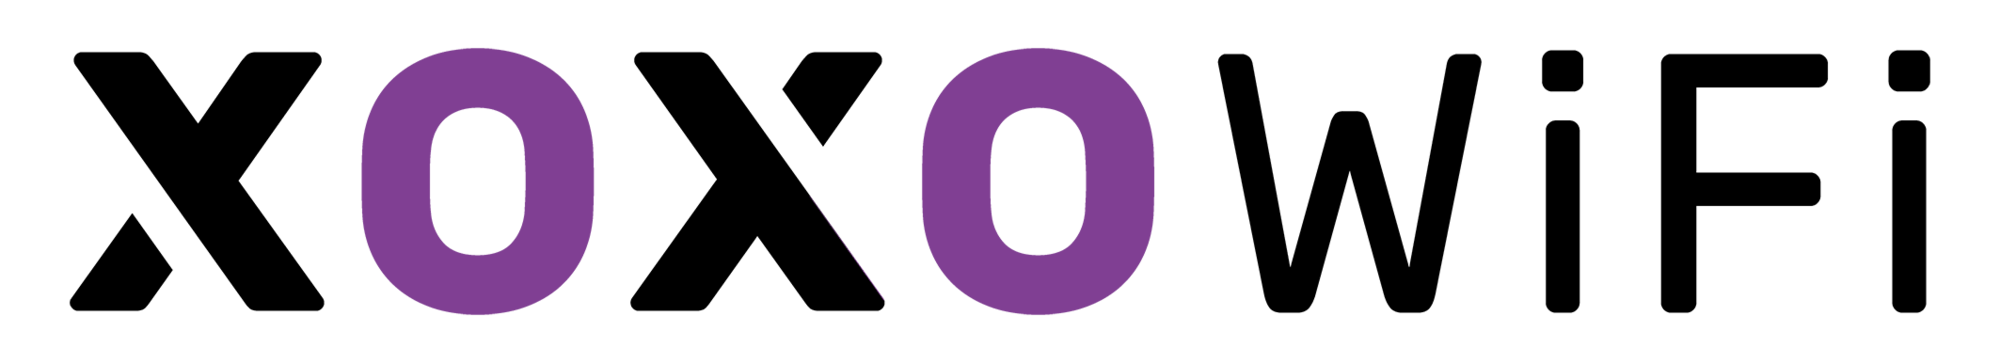 Xoxo Logo - Image - Xoxo-wifi-logo-b 50%.png | Prepaid Data SIM Card Wiki ...